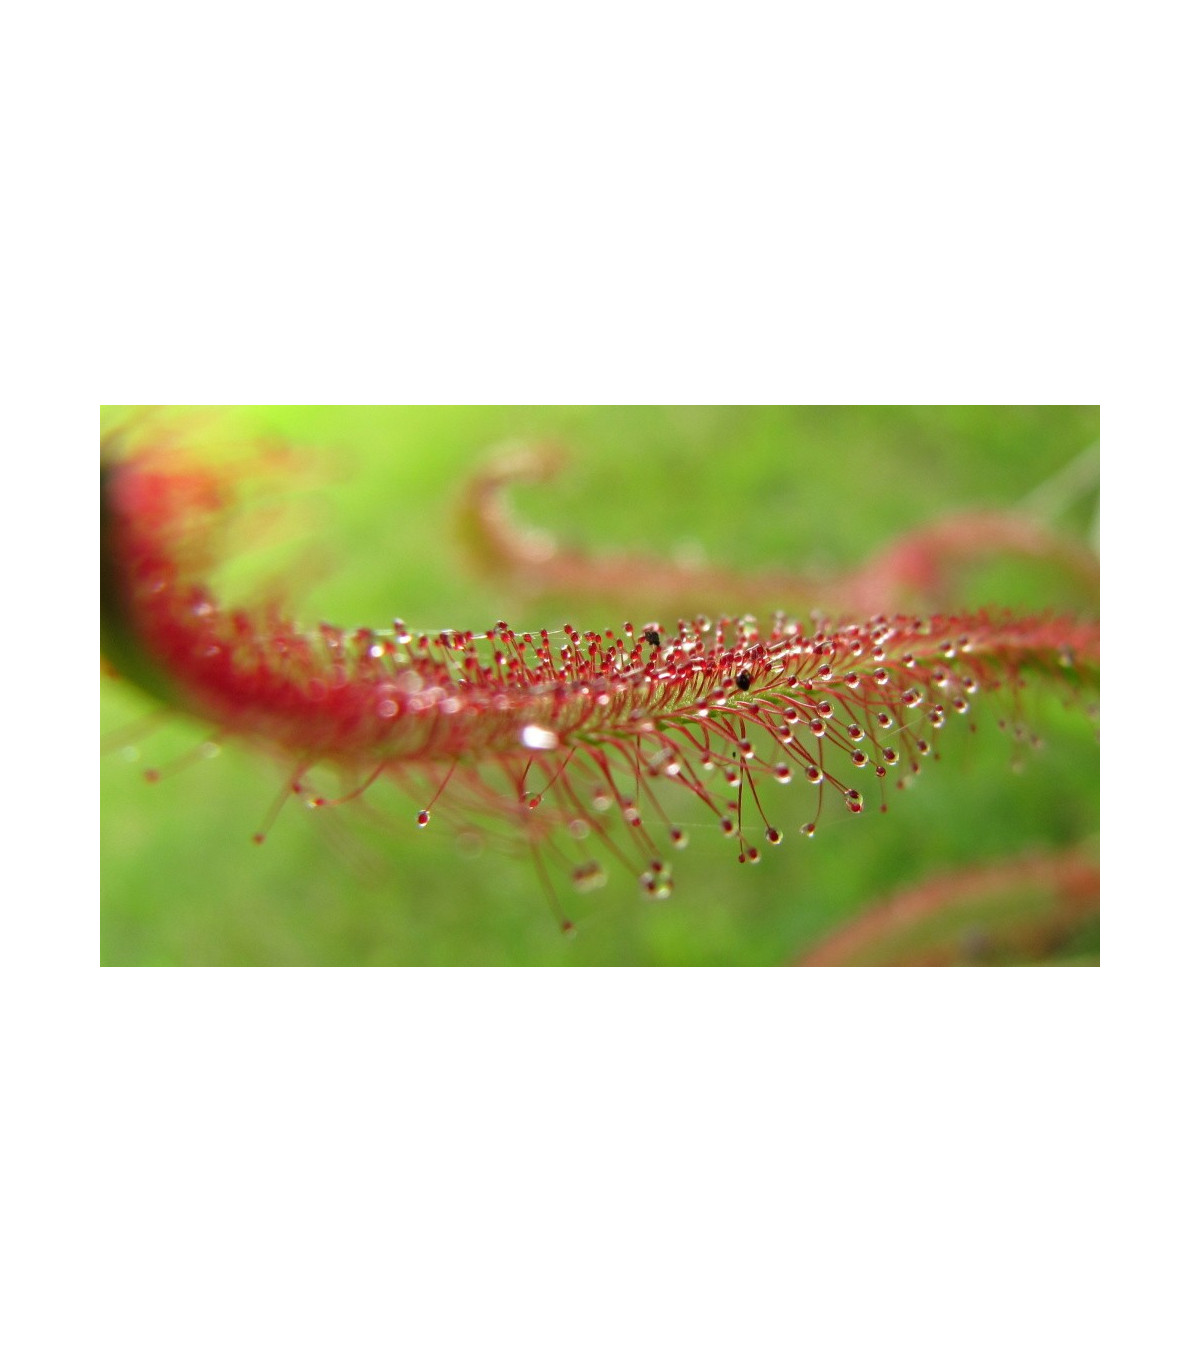 Rosnatka červená - Drosera capensis Giftberg - prodej semen - 15 ks